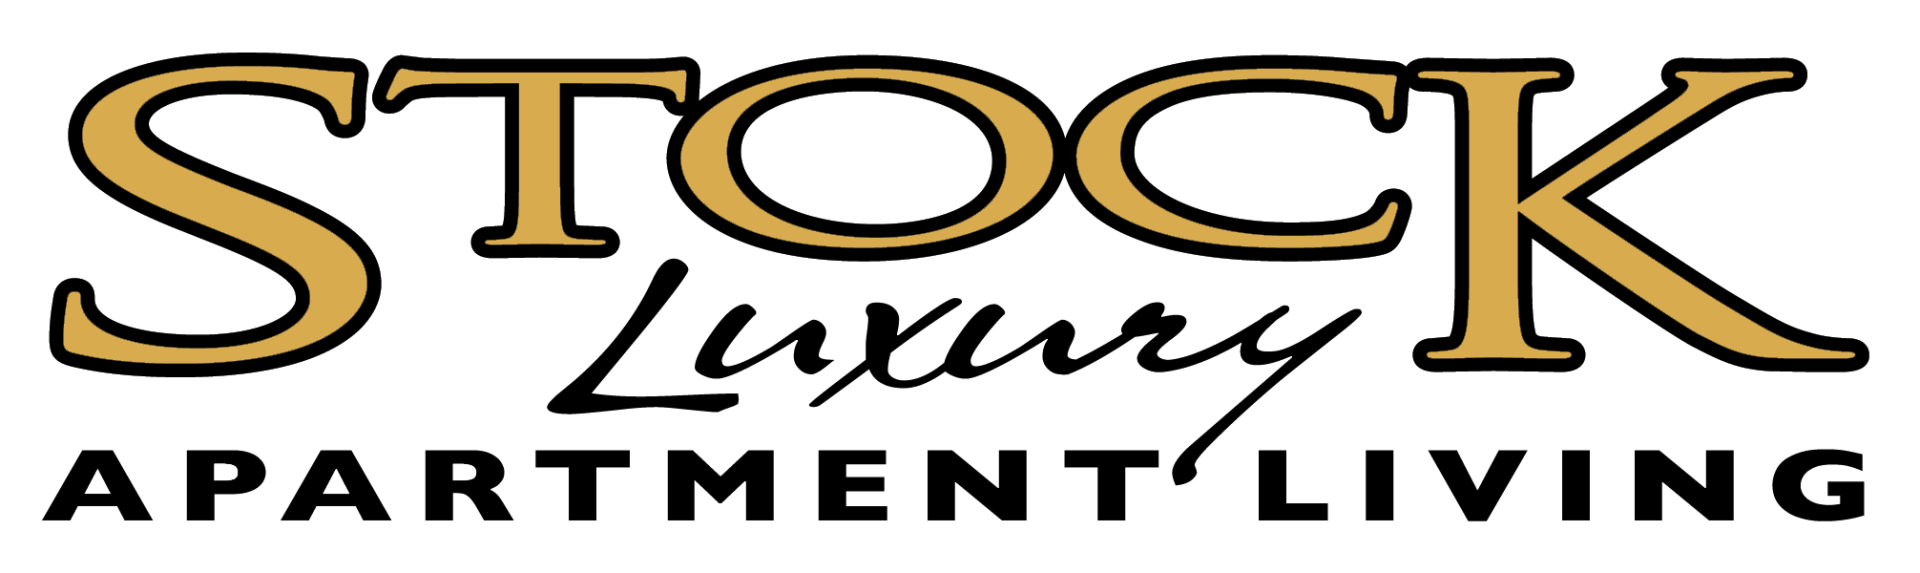 Stock Luxury Apartment Living management logo.